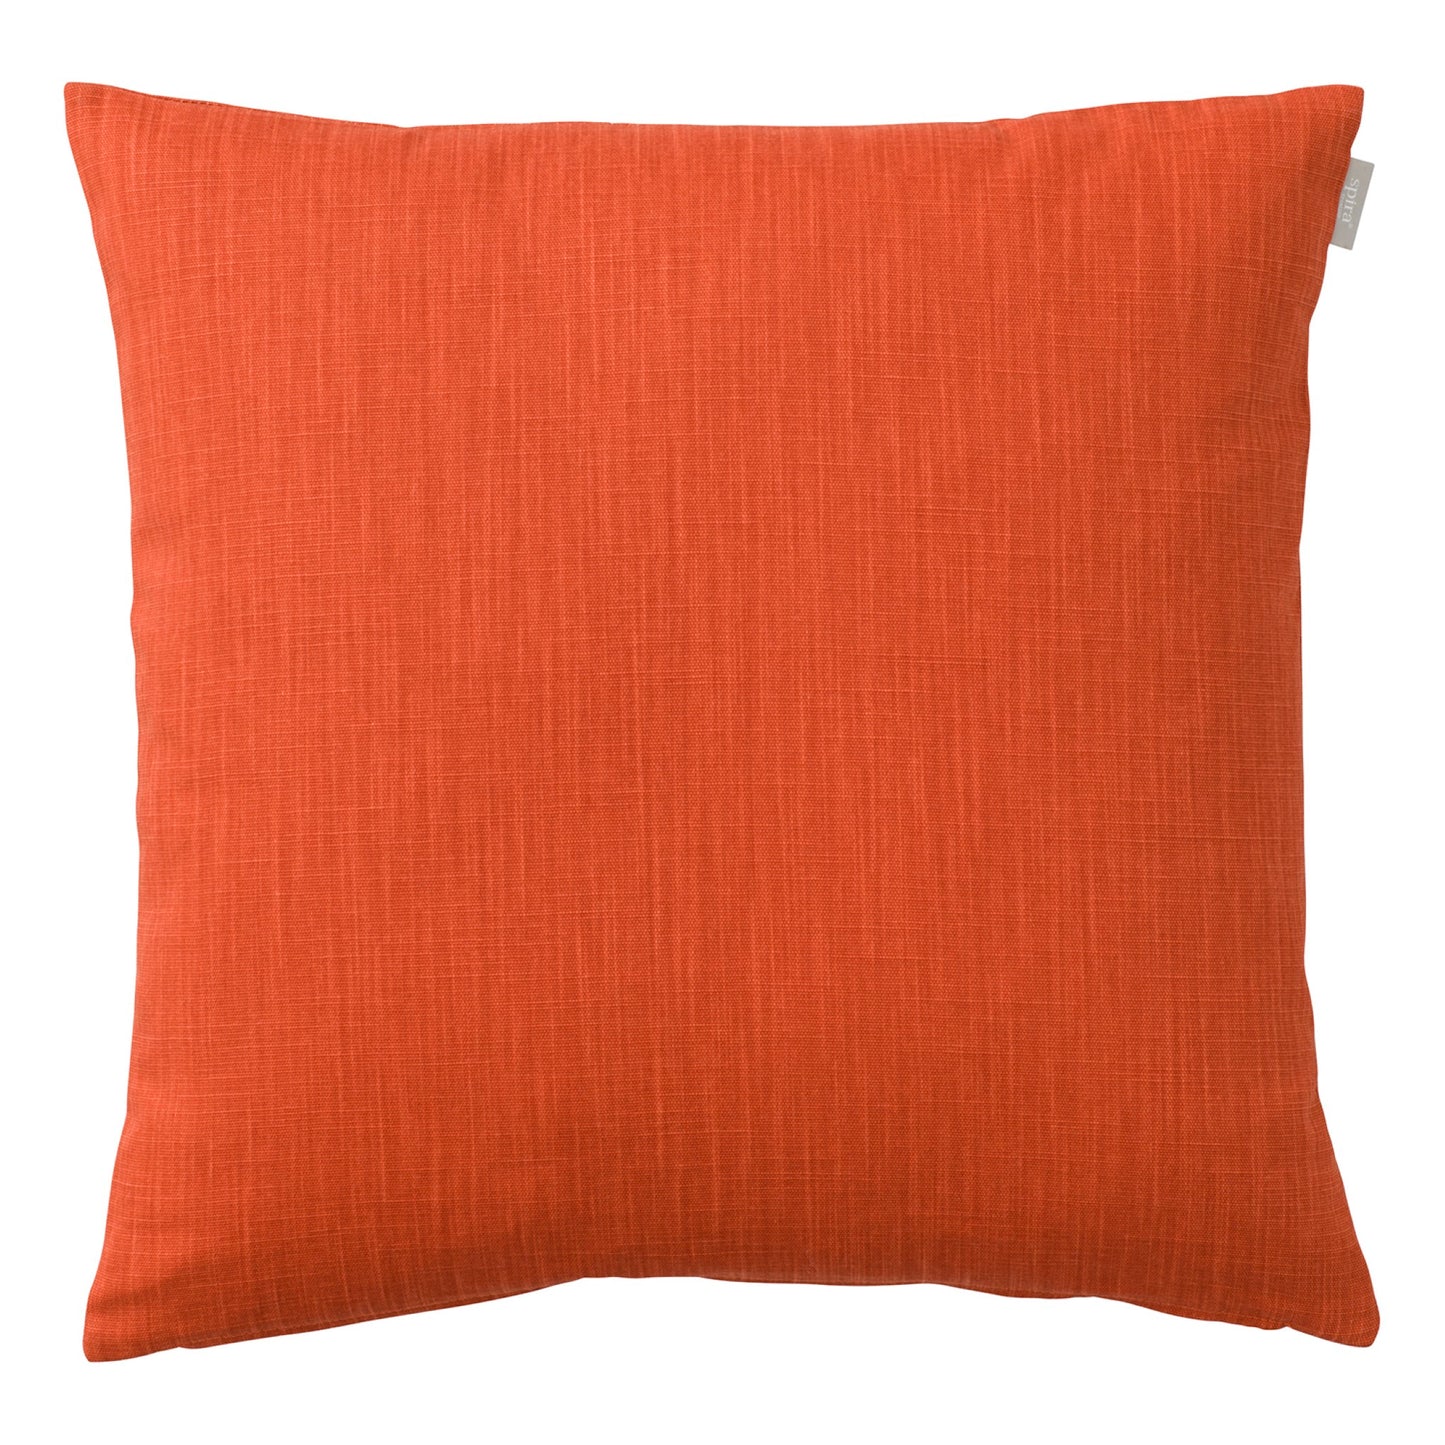 Slat Cushion Cover - Terracotta